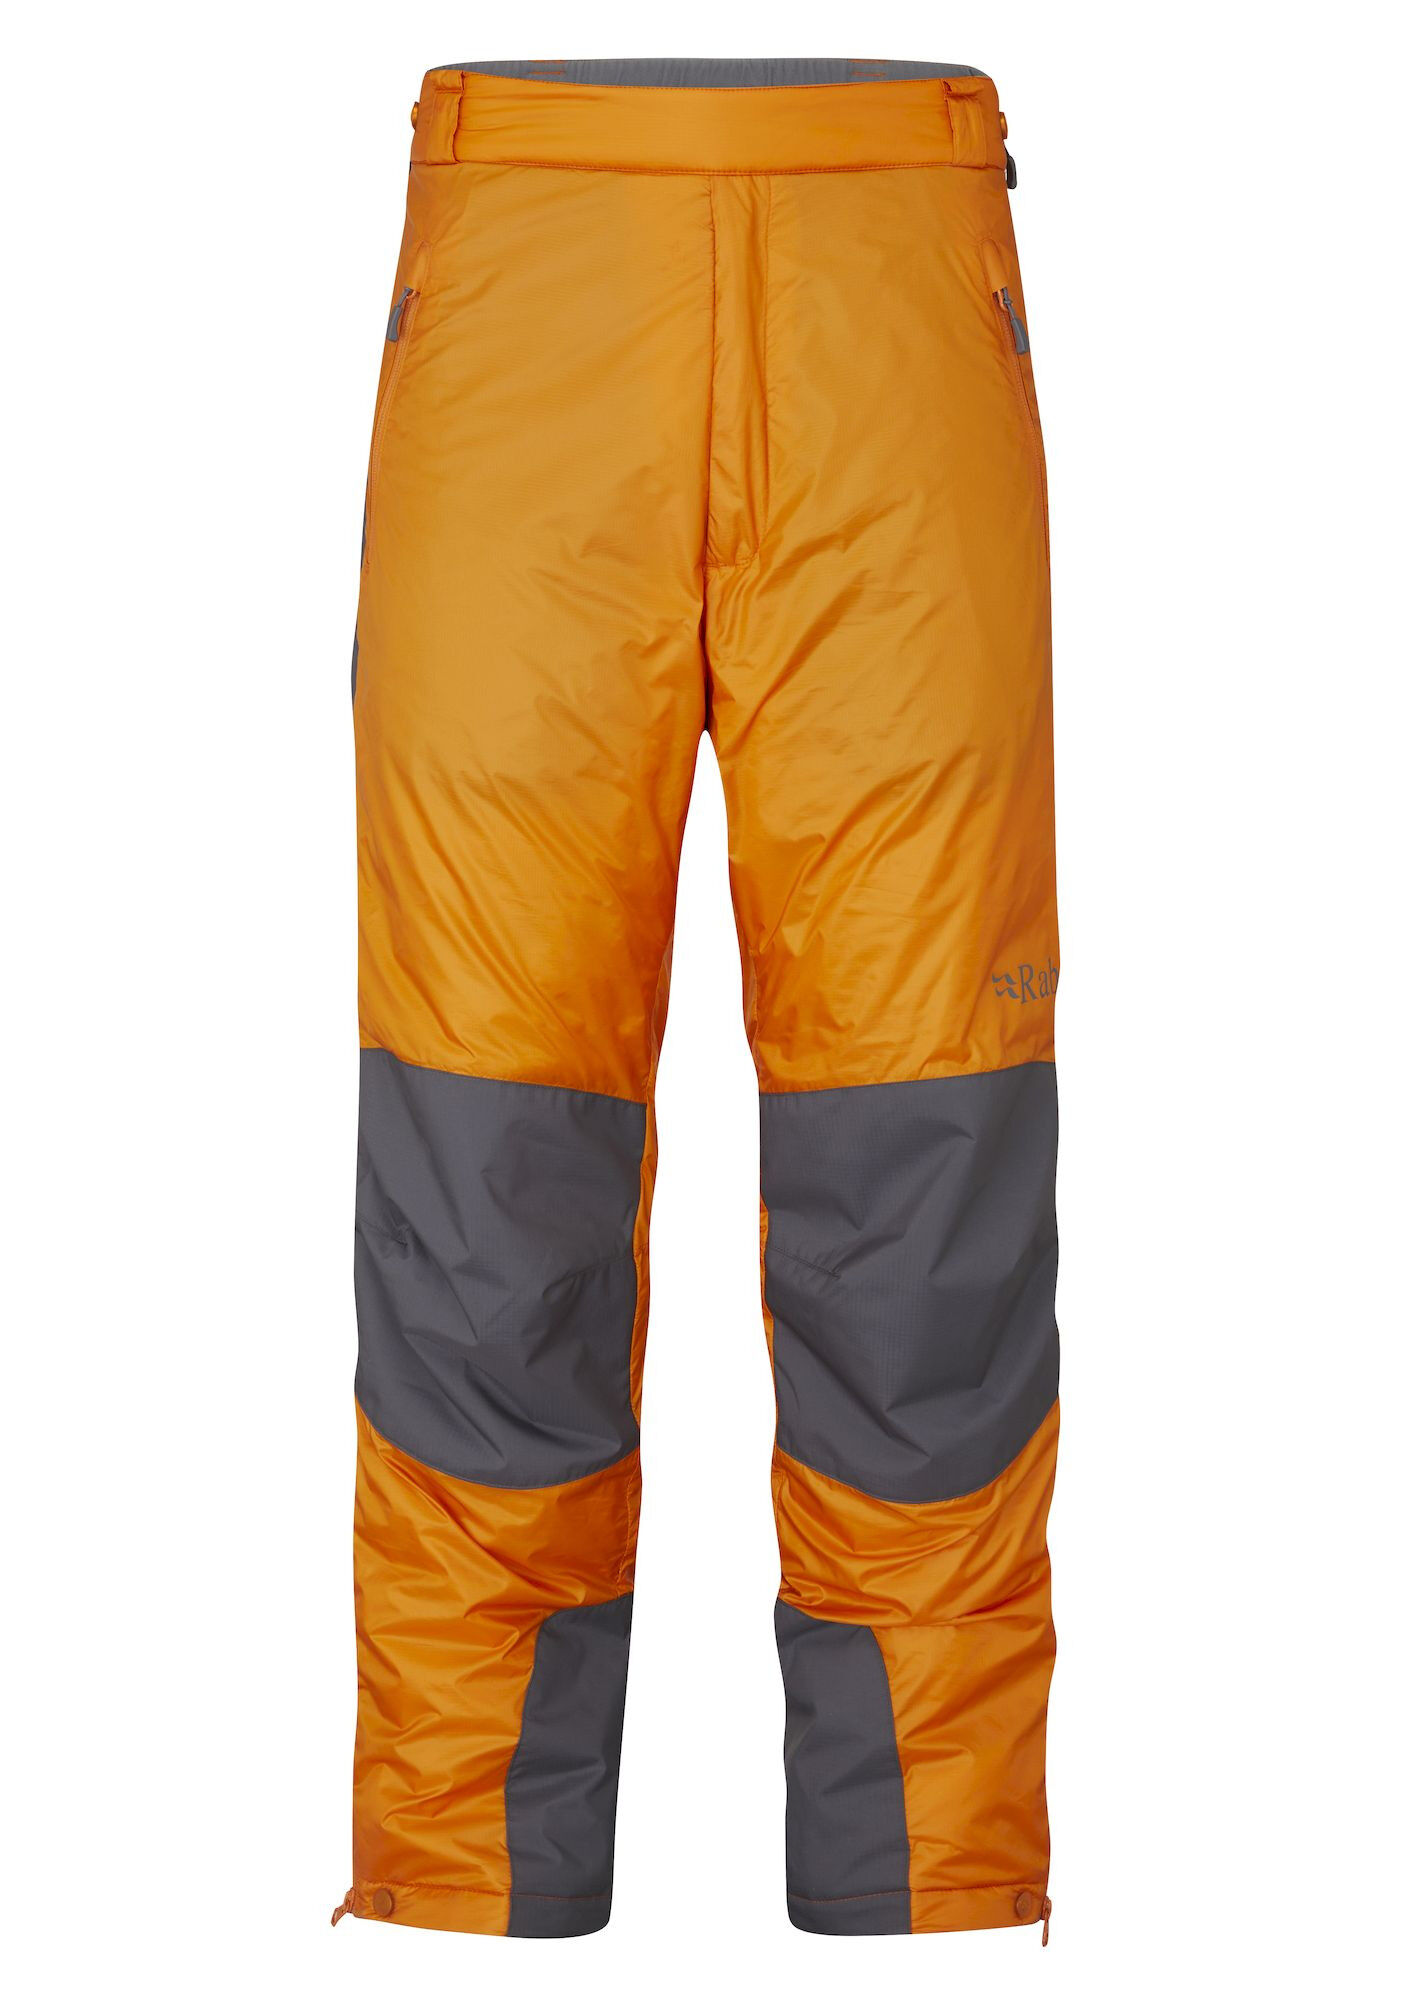 Rab Photon Pants - Mountaineering trousers